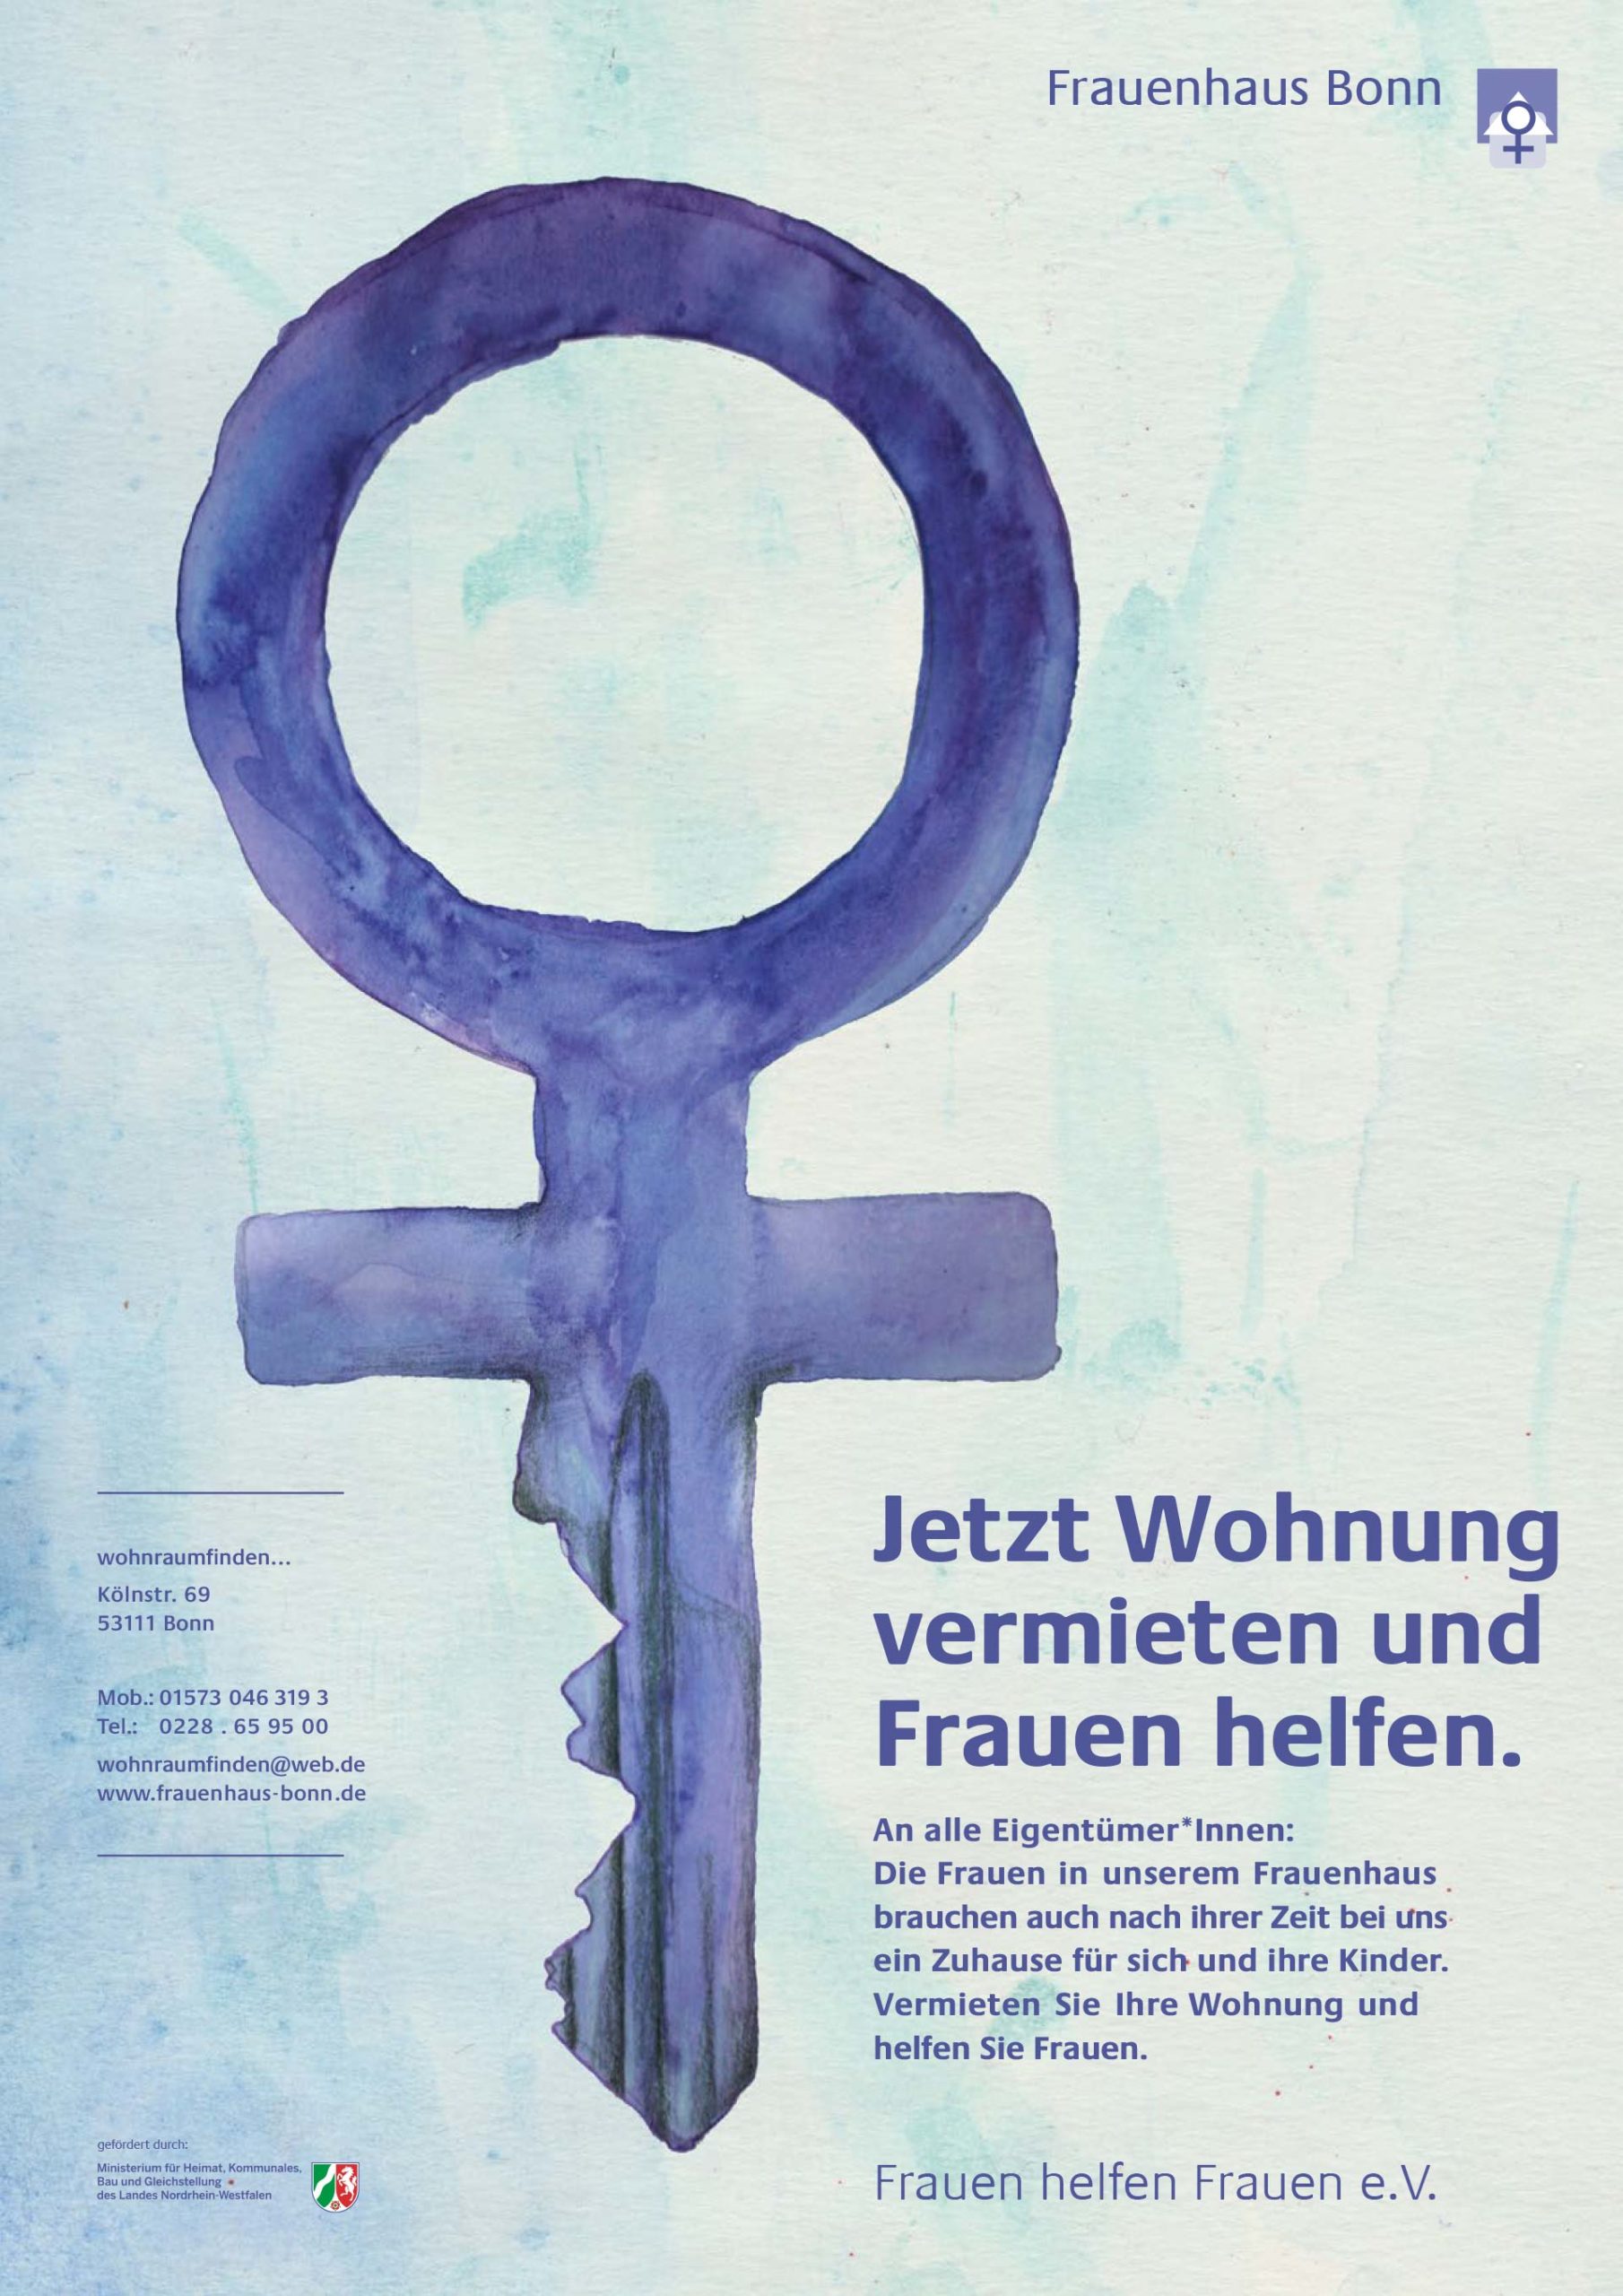 Wohnraum-finden-Frauenhaus-Bonn-Plakat-Linus-Knappe-Vivian-Hoetter-scaled